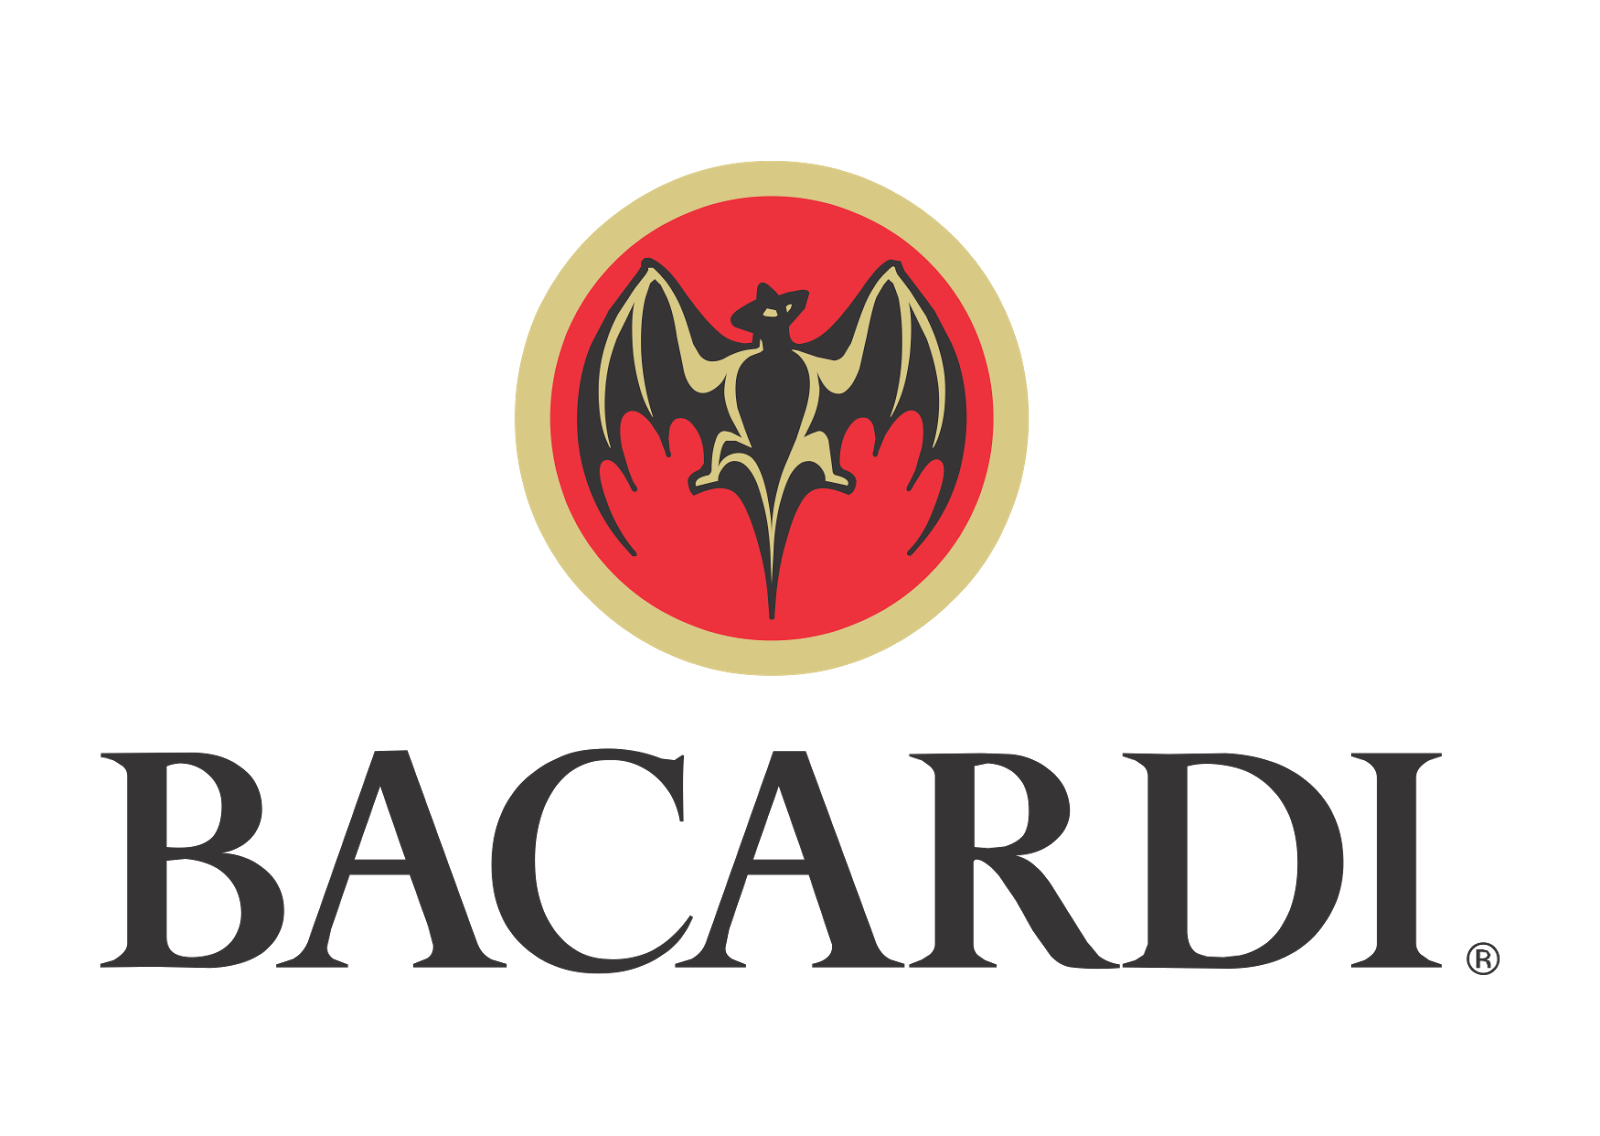 Bacardi-vector-logo.png